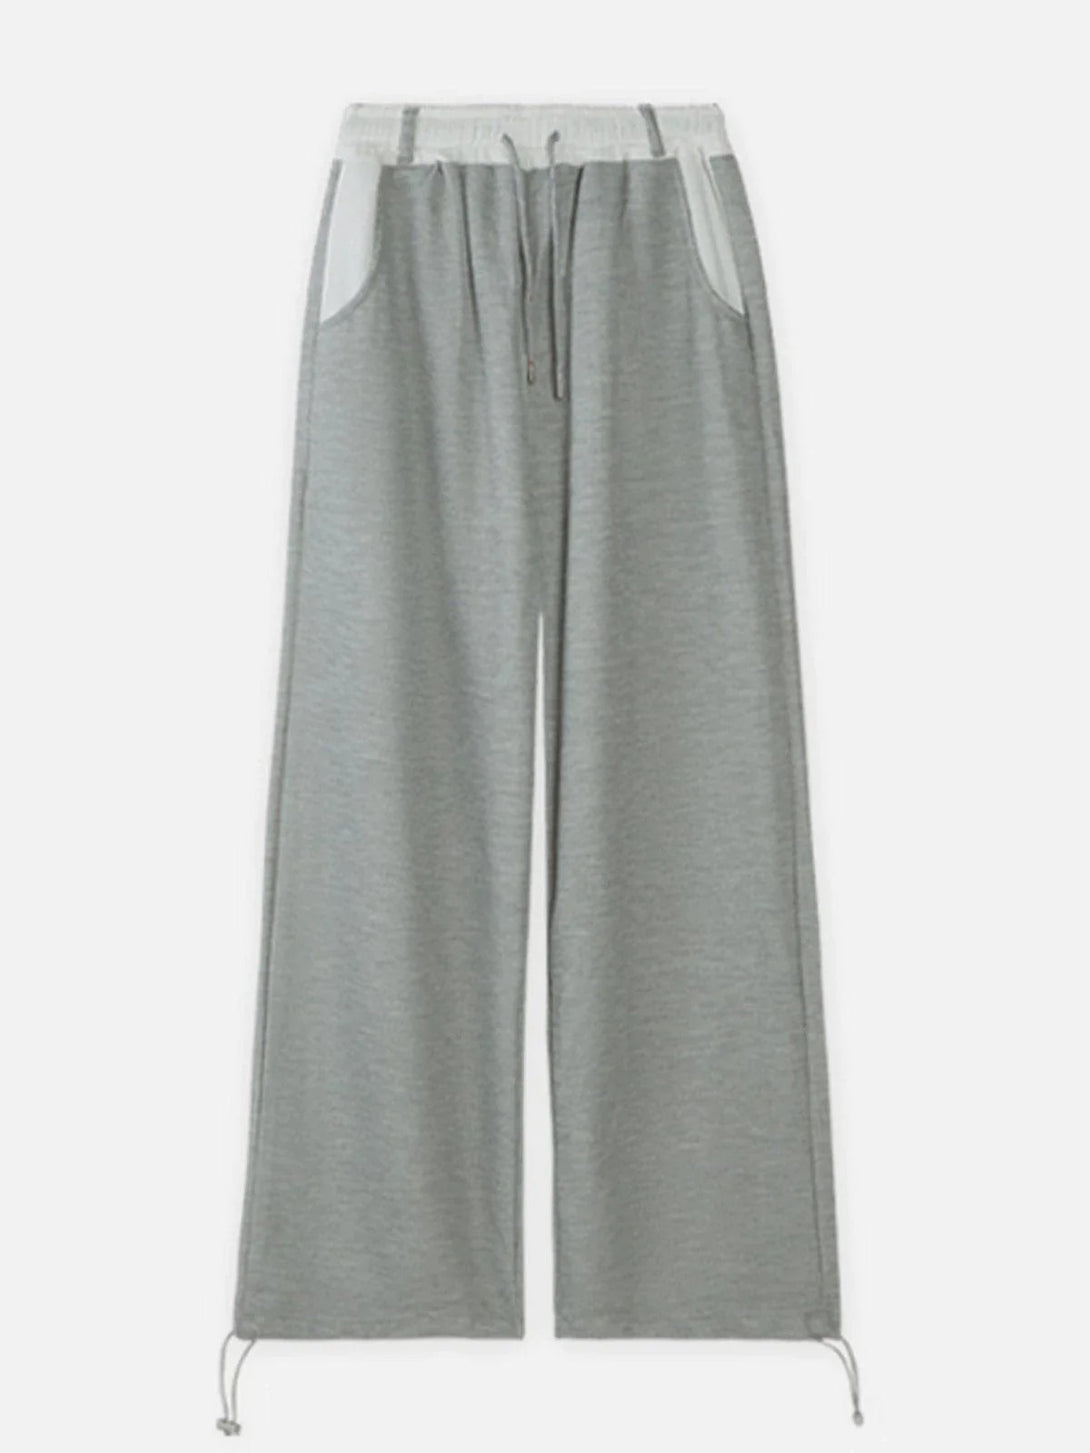 Majesda® - Colorblock Drawstring Pants outfit ideas streetwear fashion